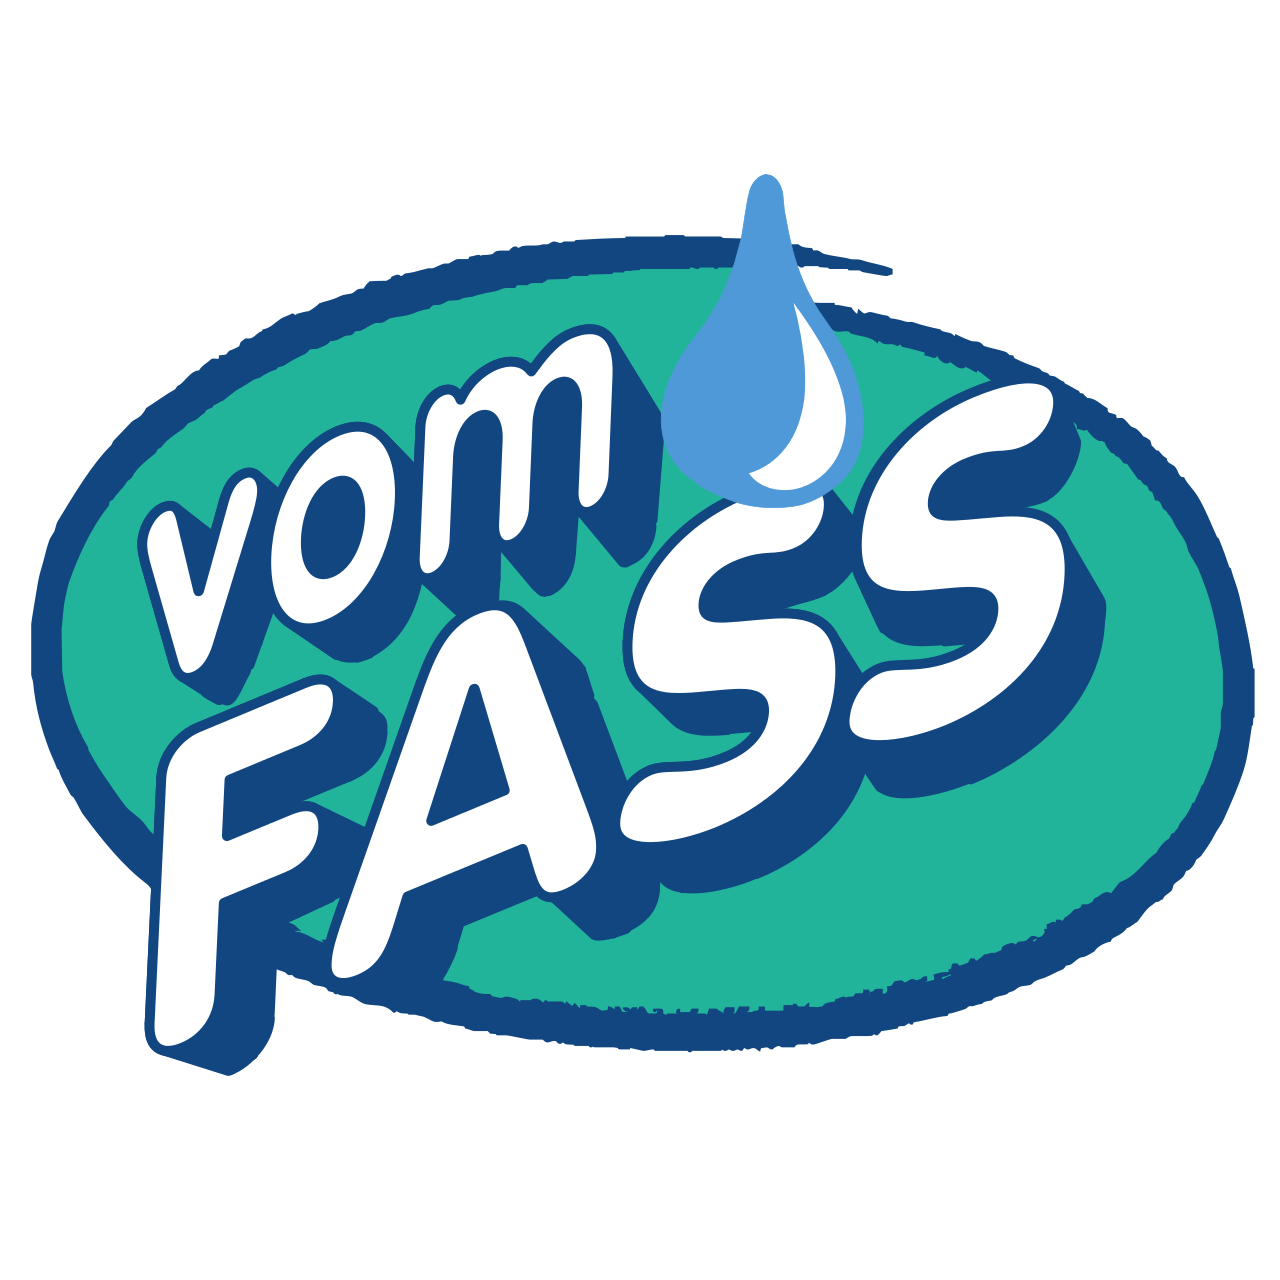 vomfass franchise